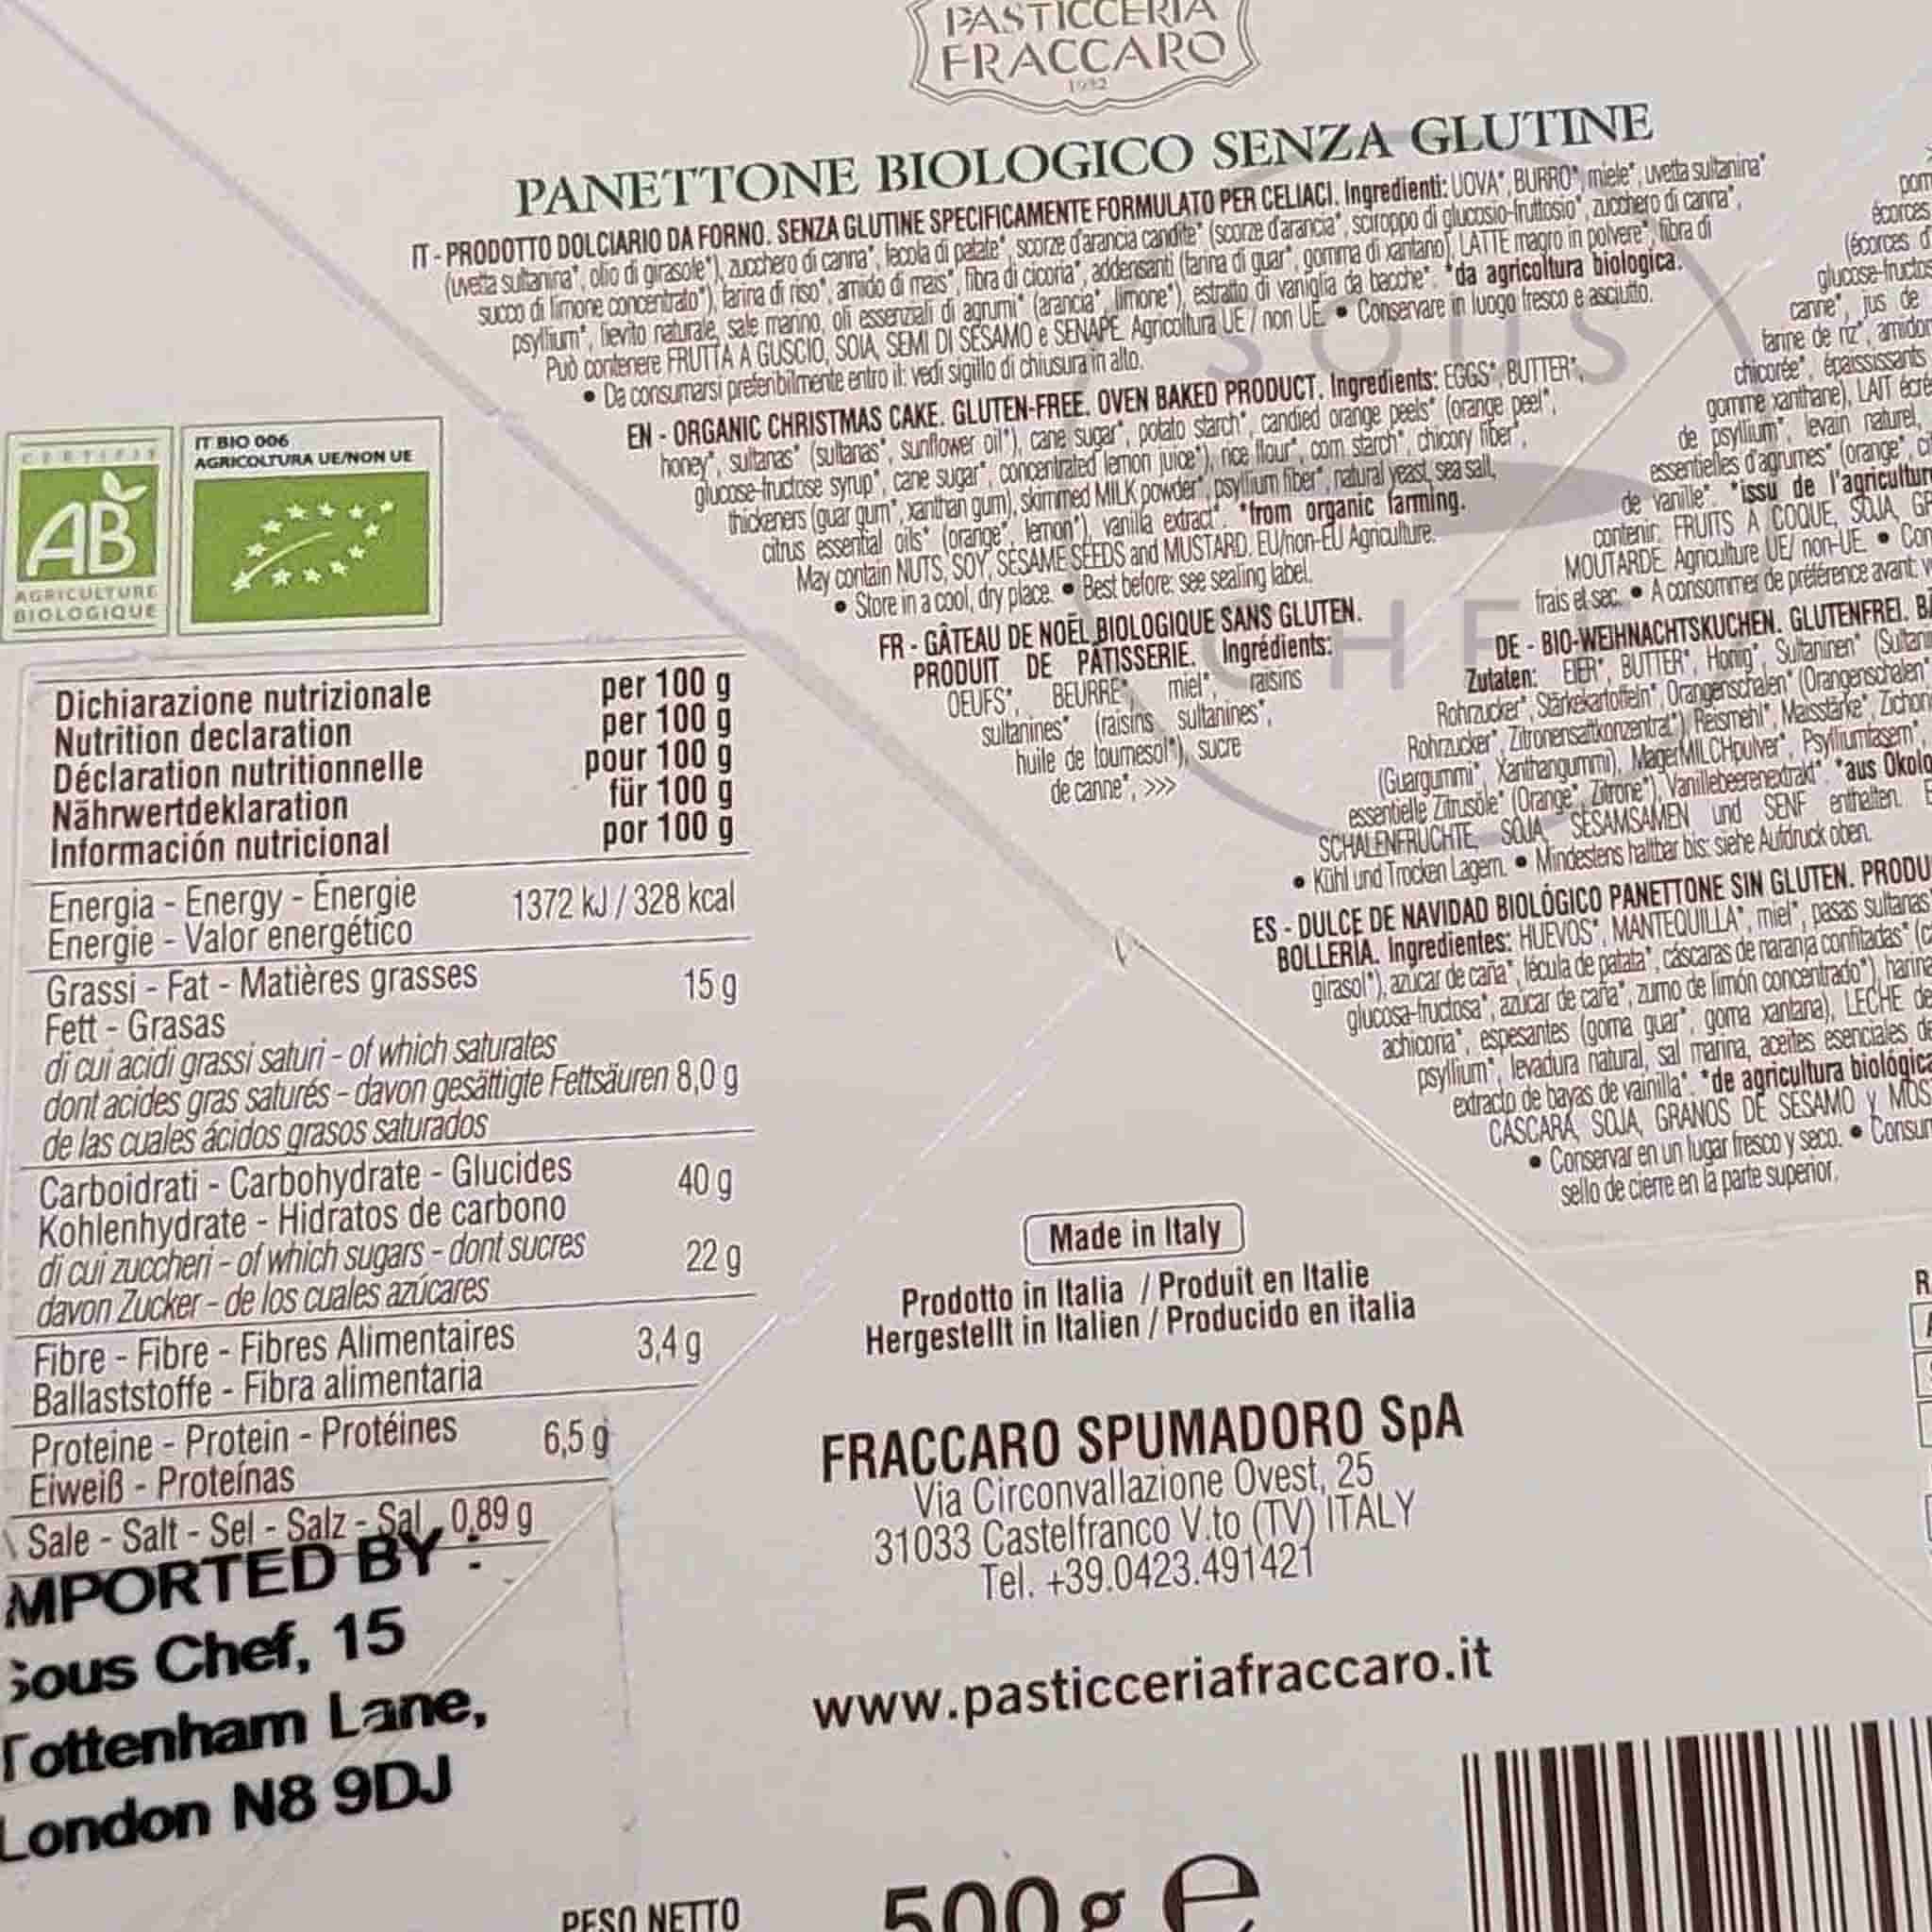 Pasticceria Fraccaro Organic Gluten Free Panettone, 500g